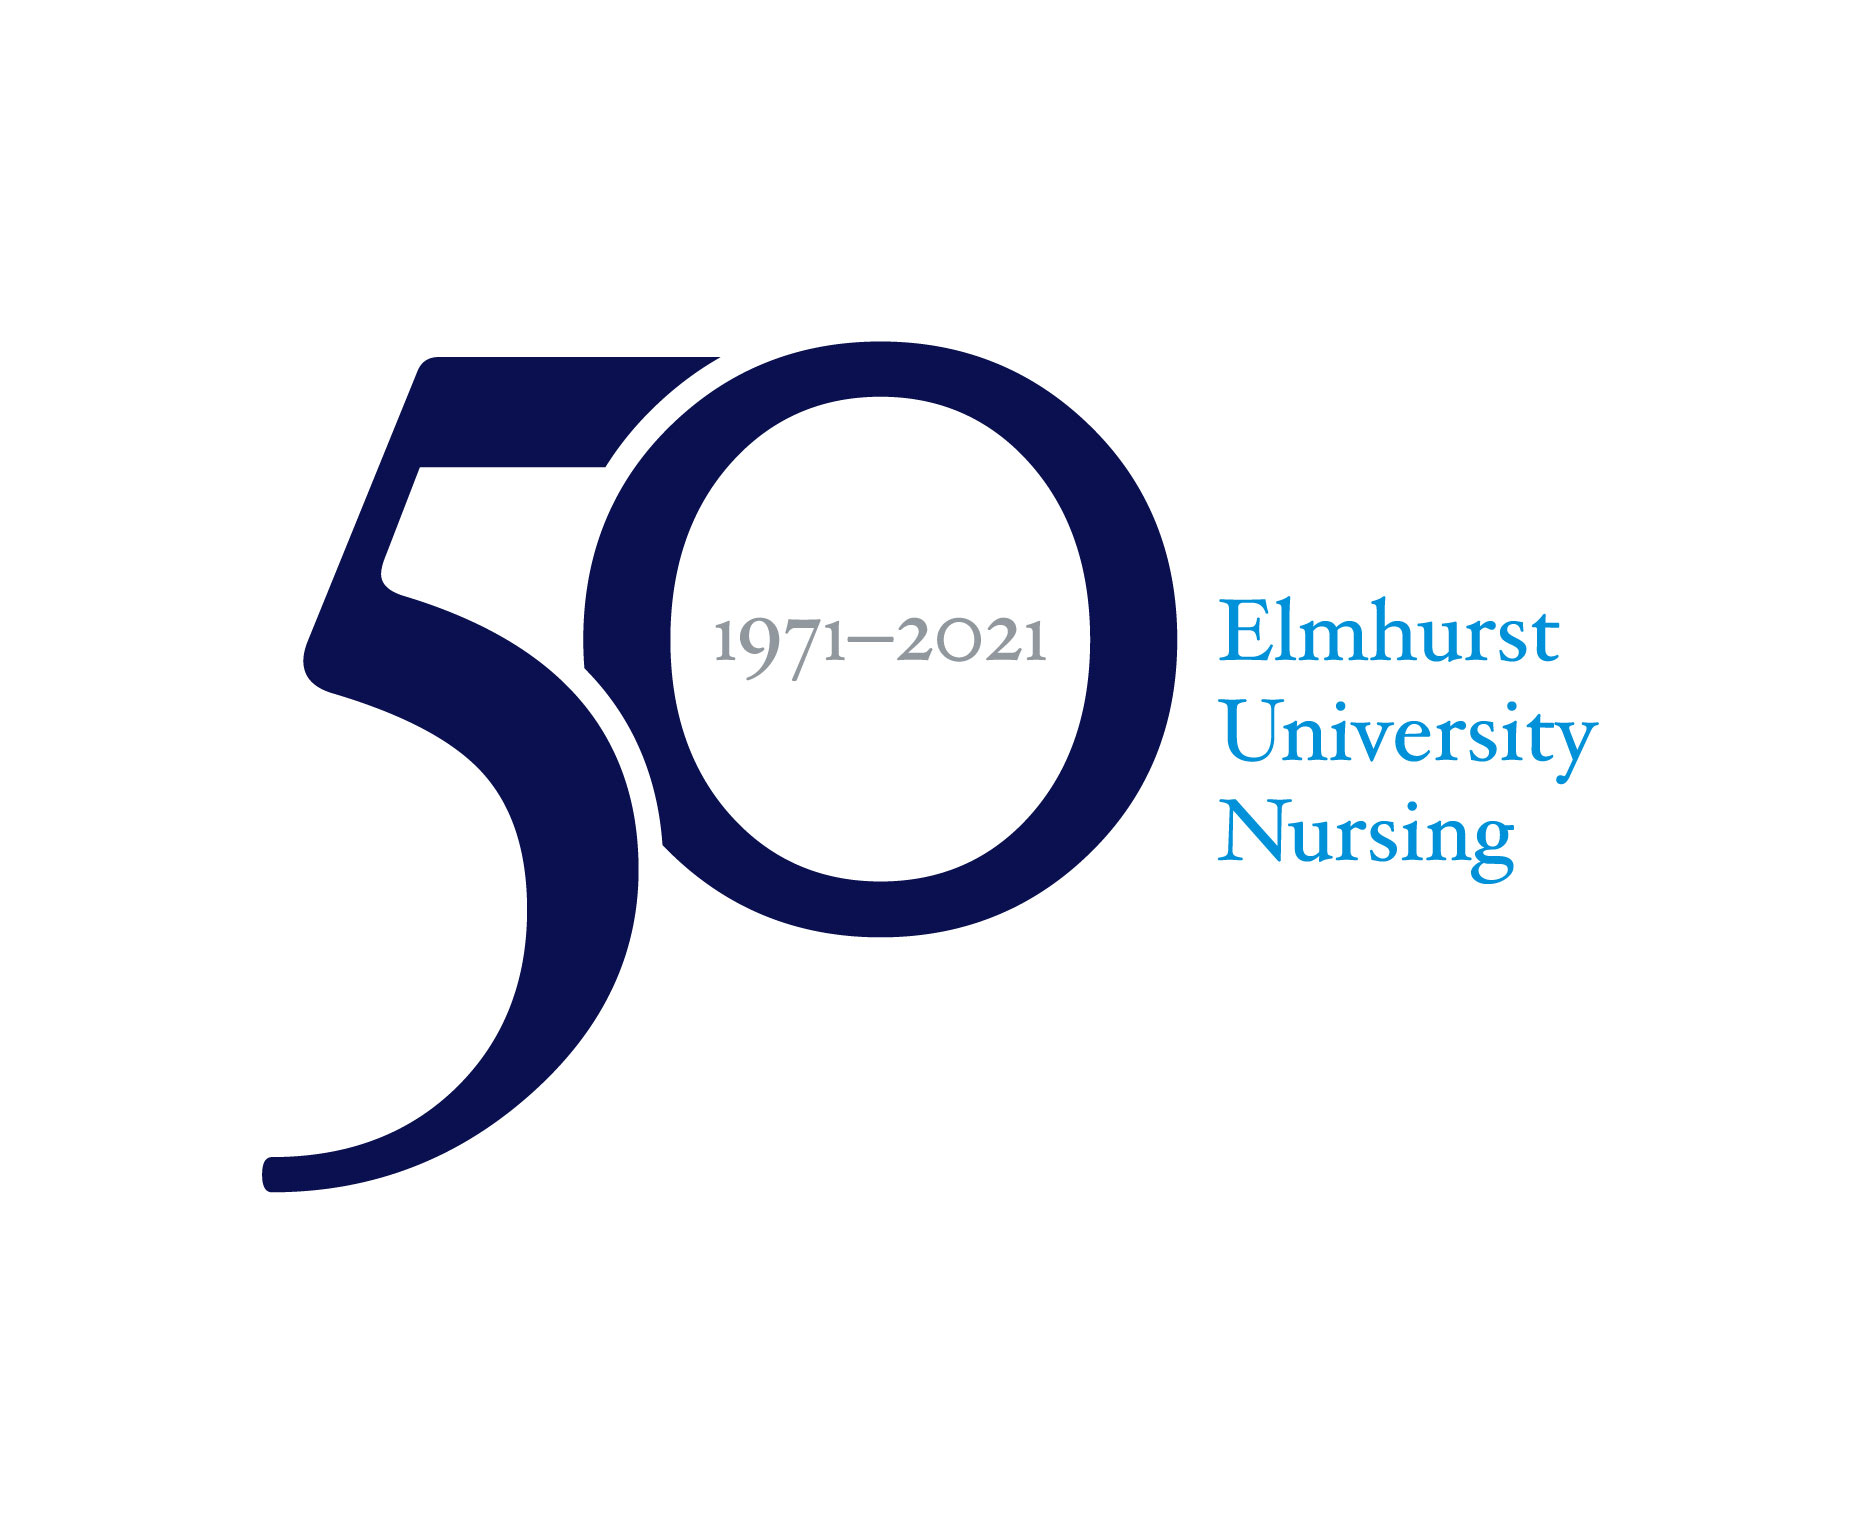 Logo that reads "50 (1971-2021) Elmhurst University Nursing"